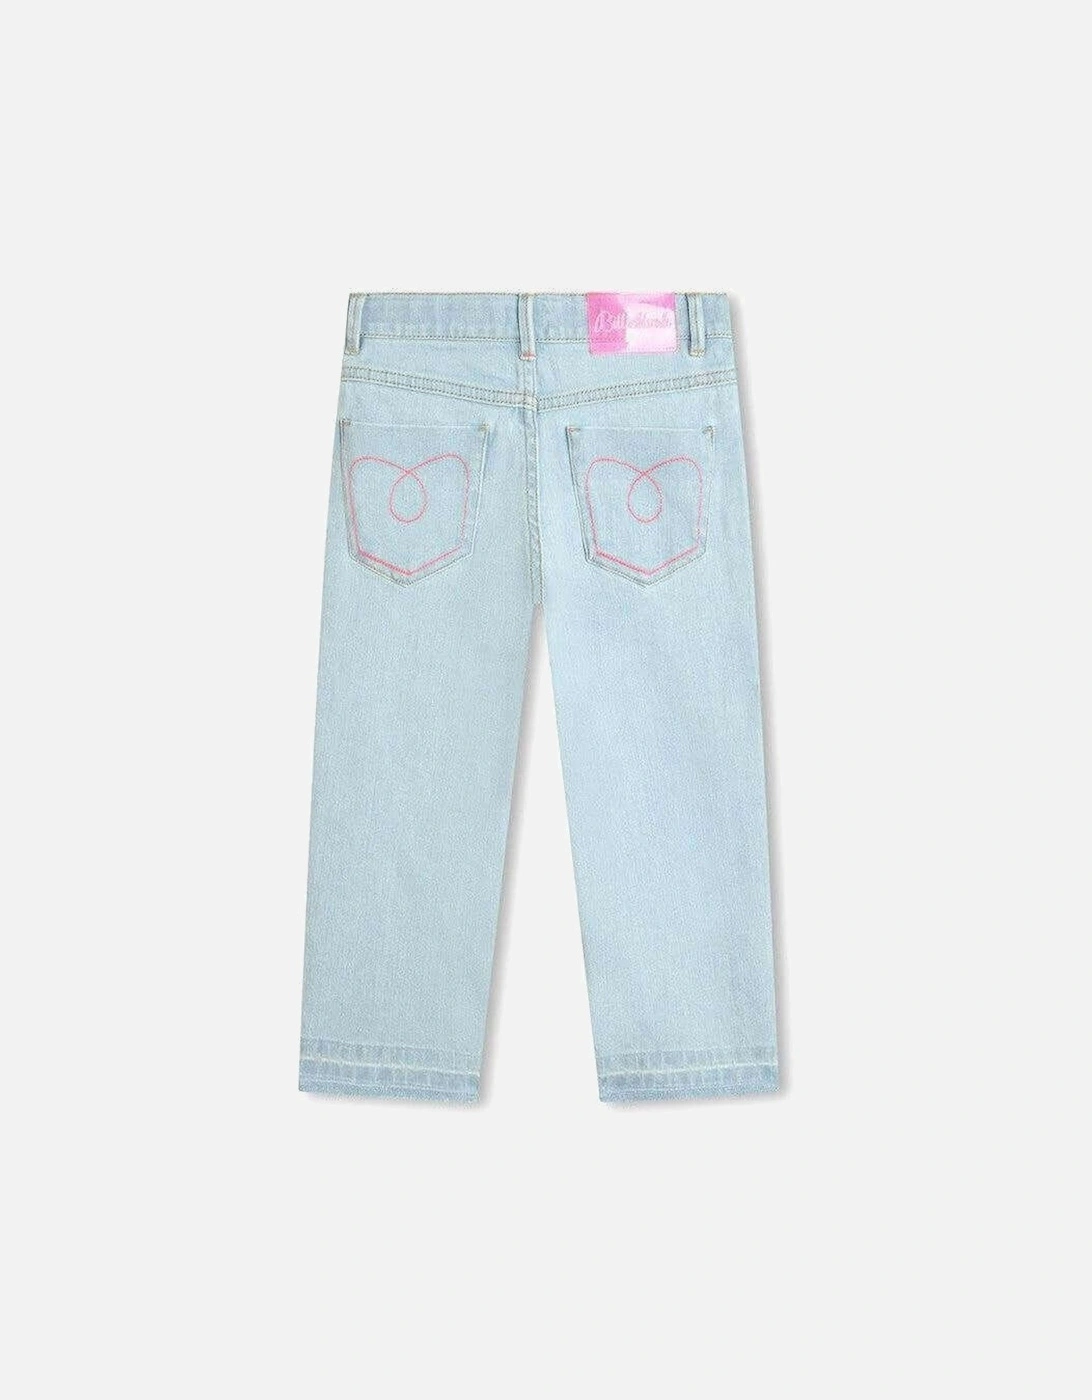 Girls Denim Sequin Jeans